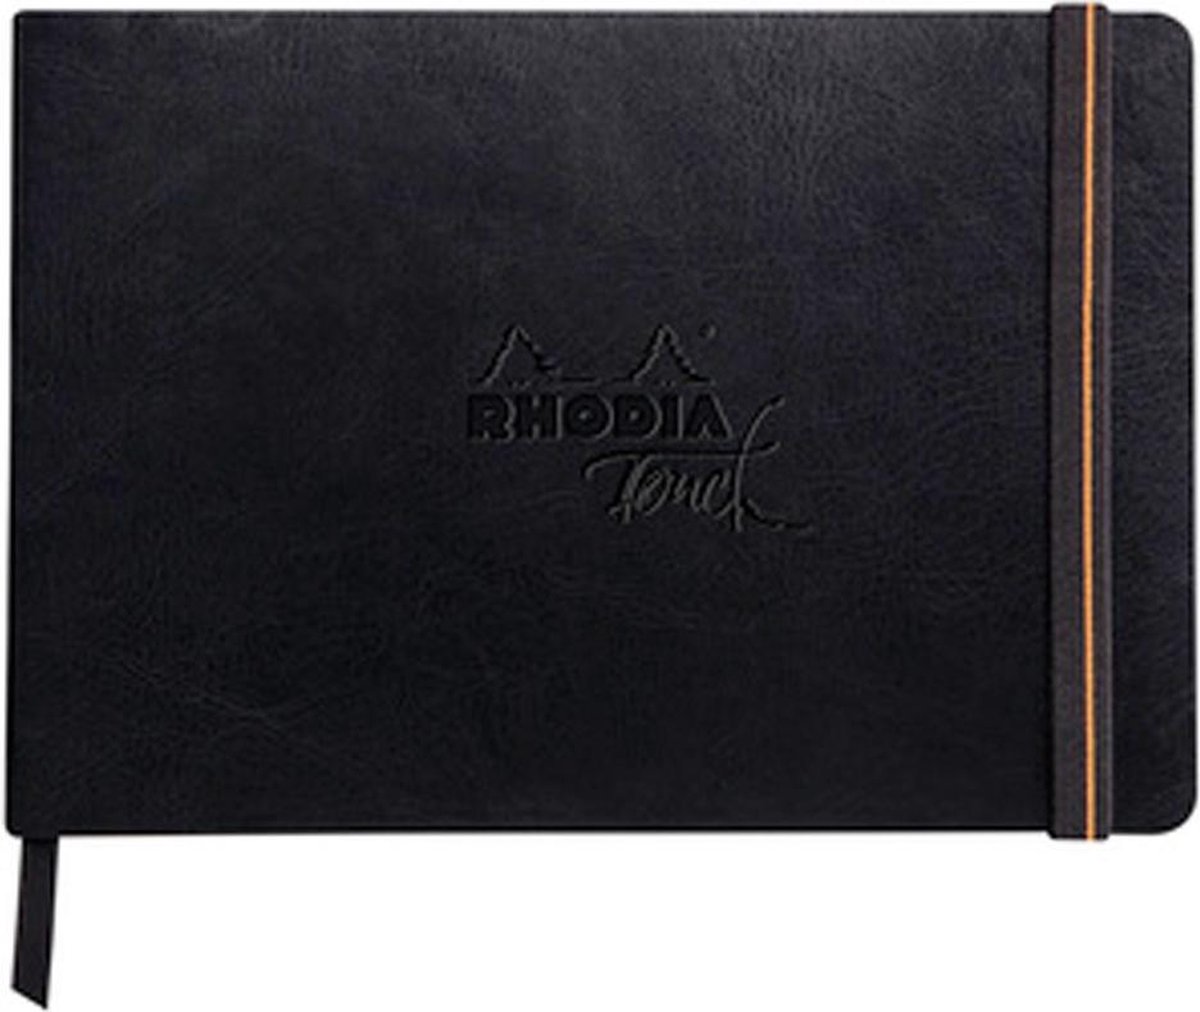 Rhodia Touch Bristol Book Soft – A5 wit papier